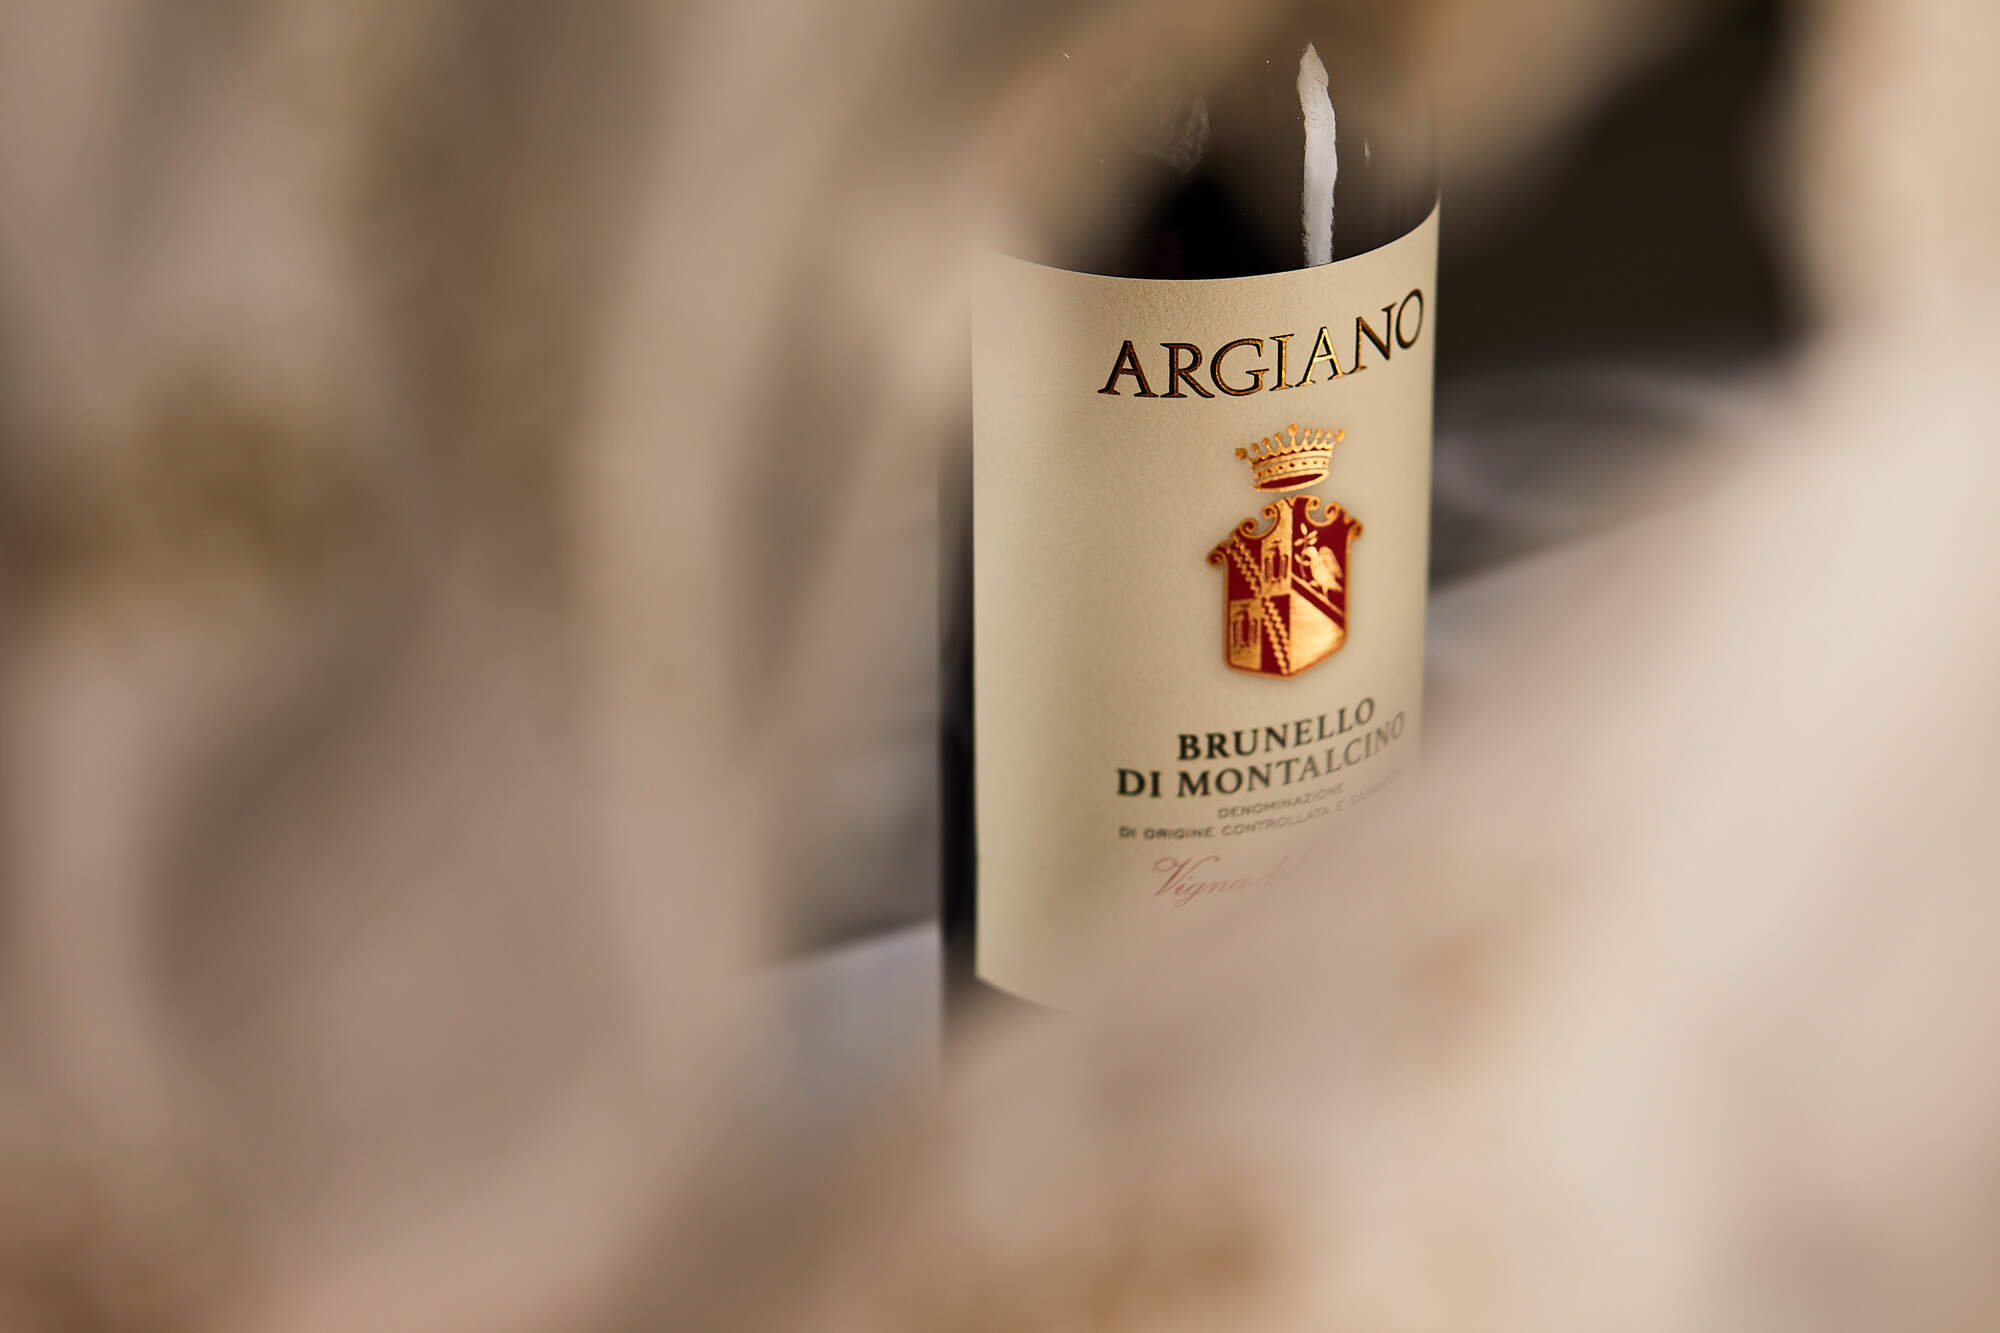 Close up image of the Argiano wine label.